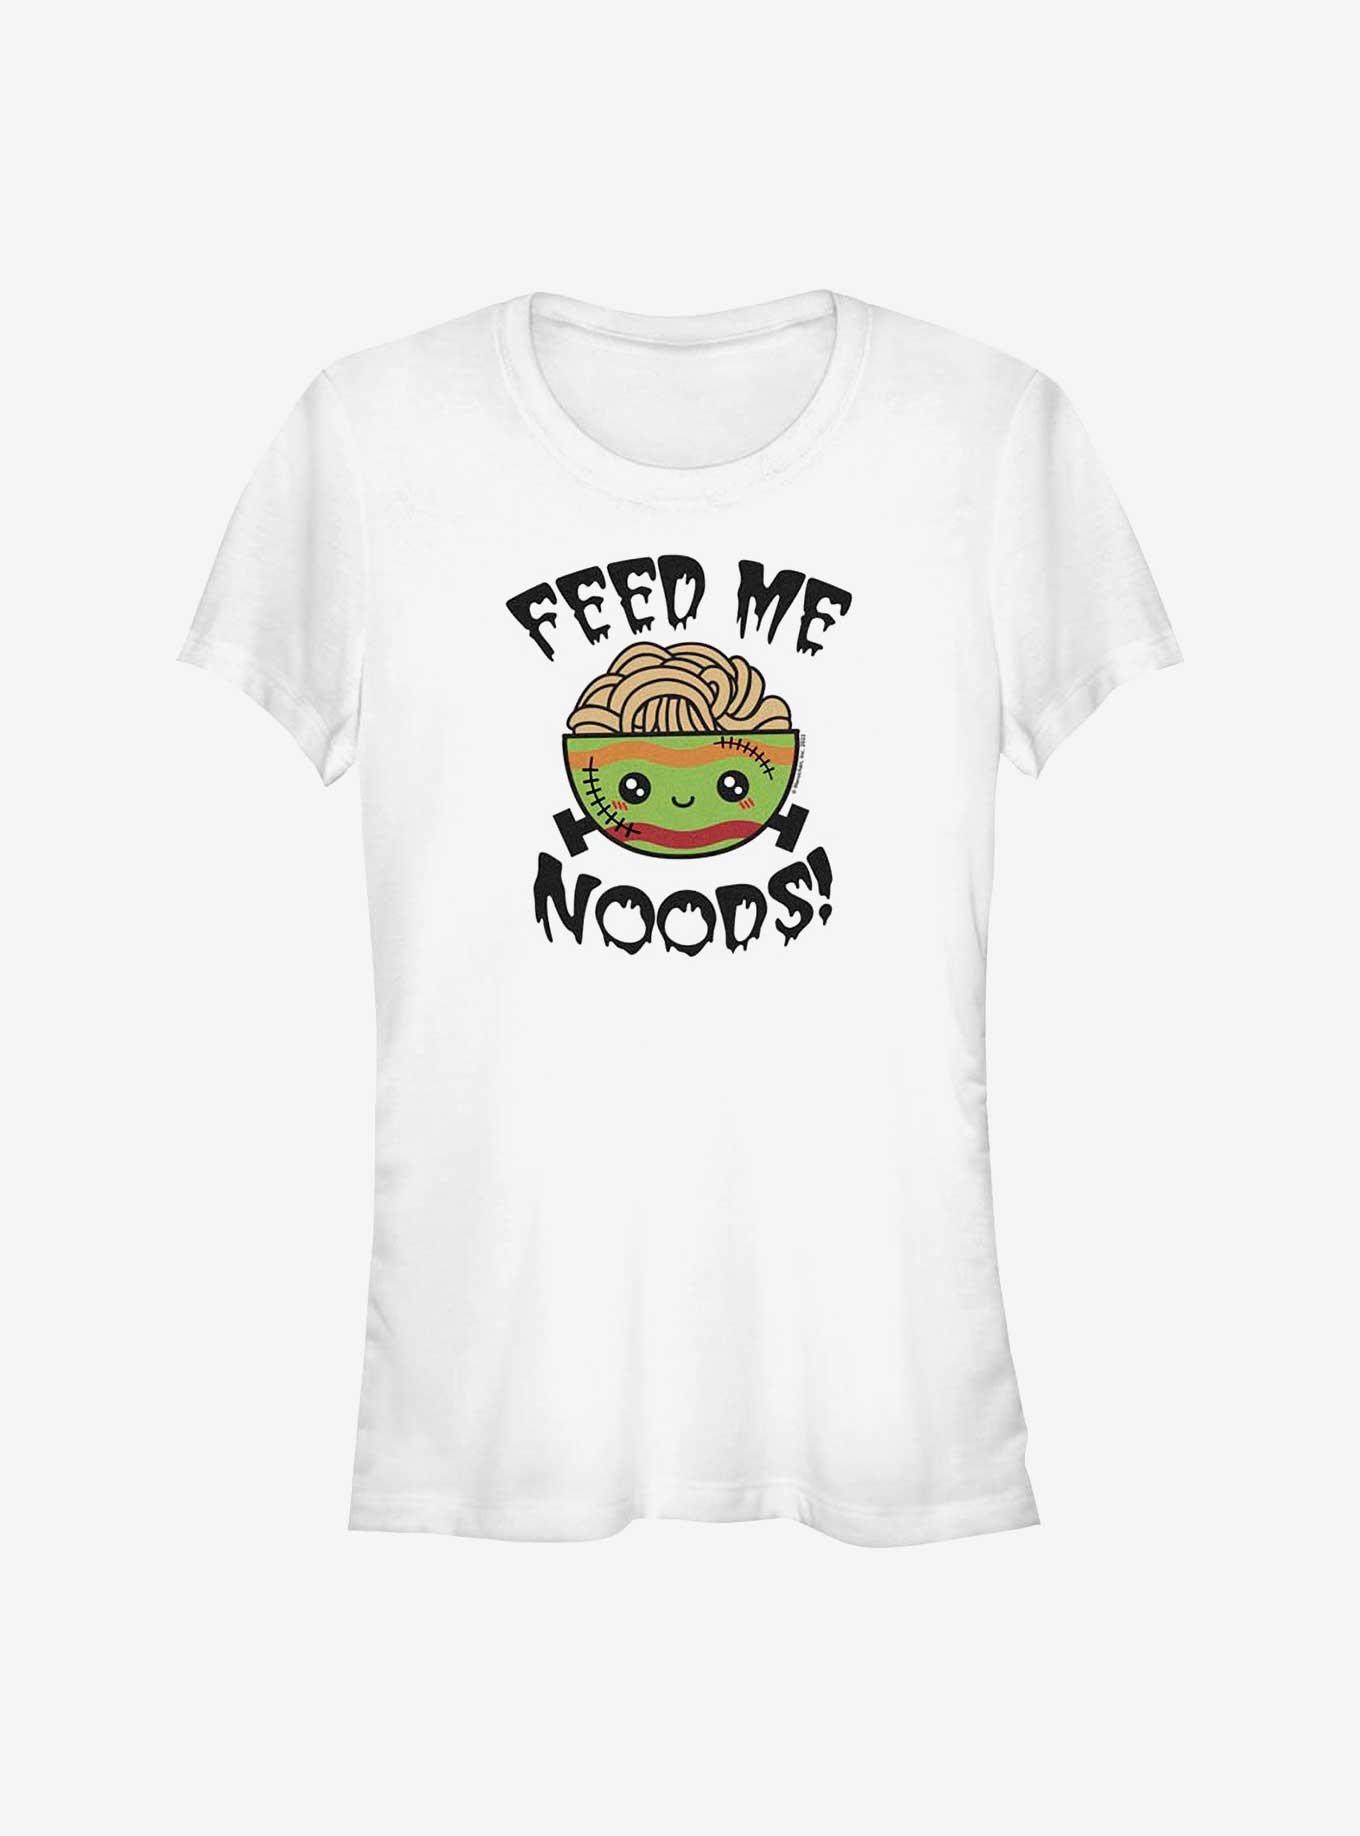 Maruchan Feed Me Noods Girls T-Shirt, WHITE, hi-res